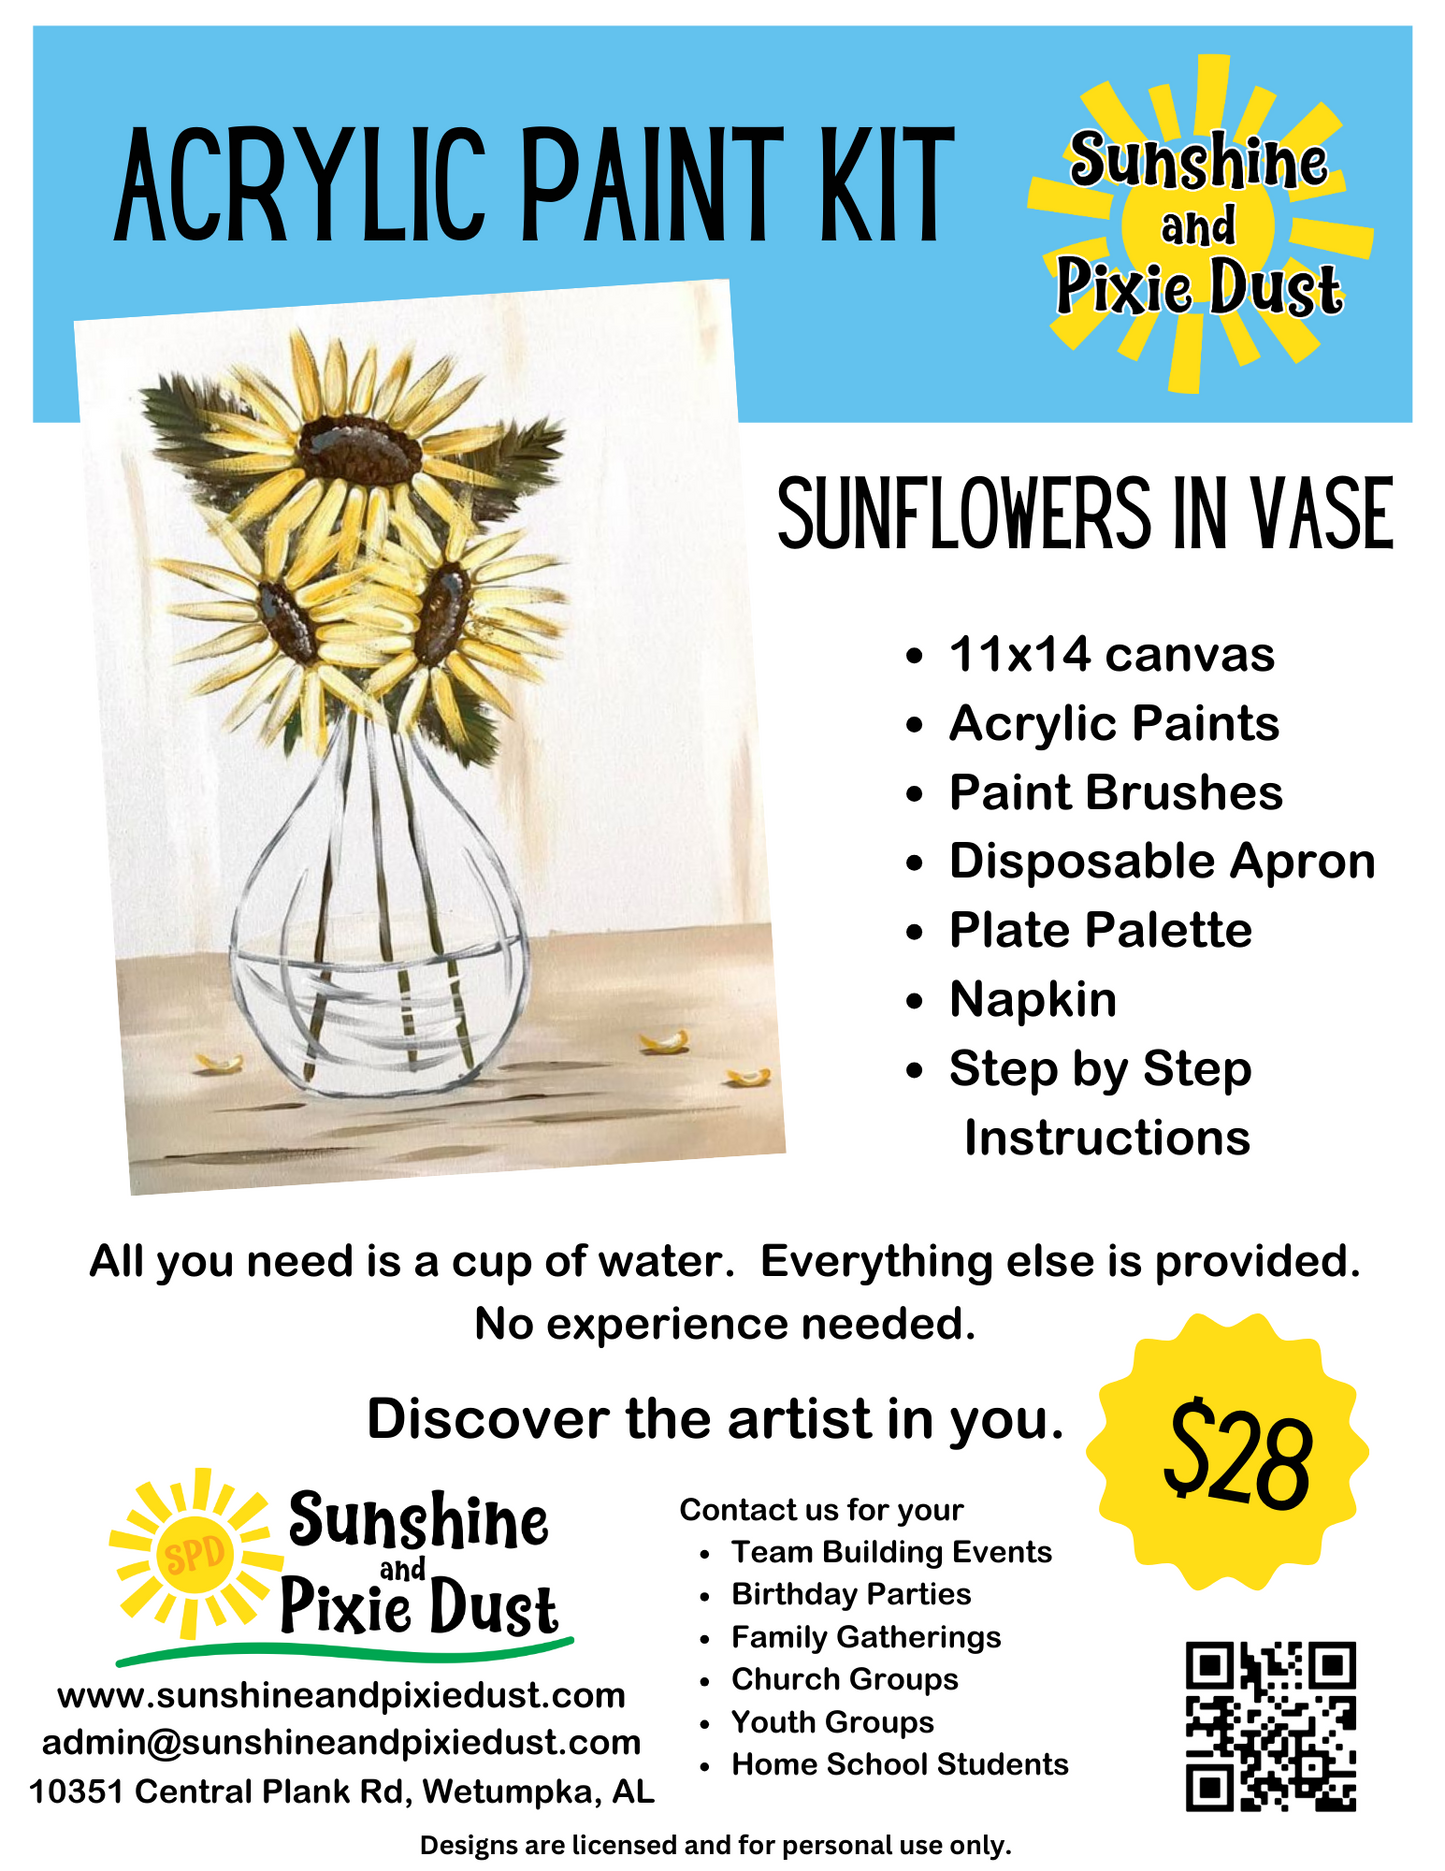 Sunflowers in Vase Acrylic Paint Kit